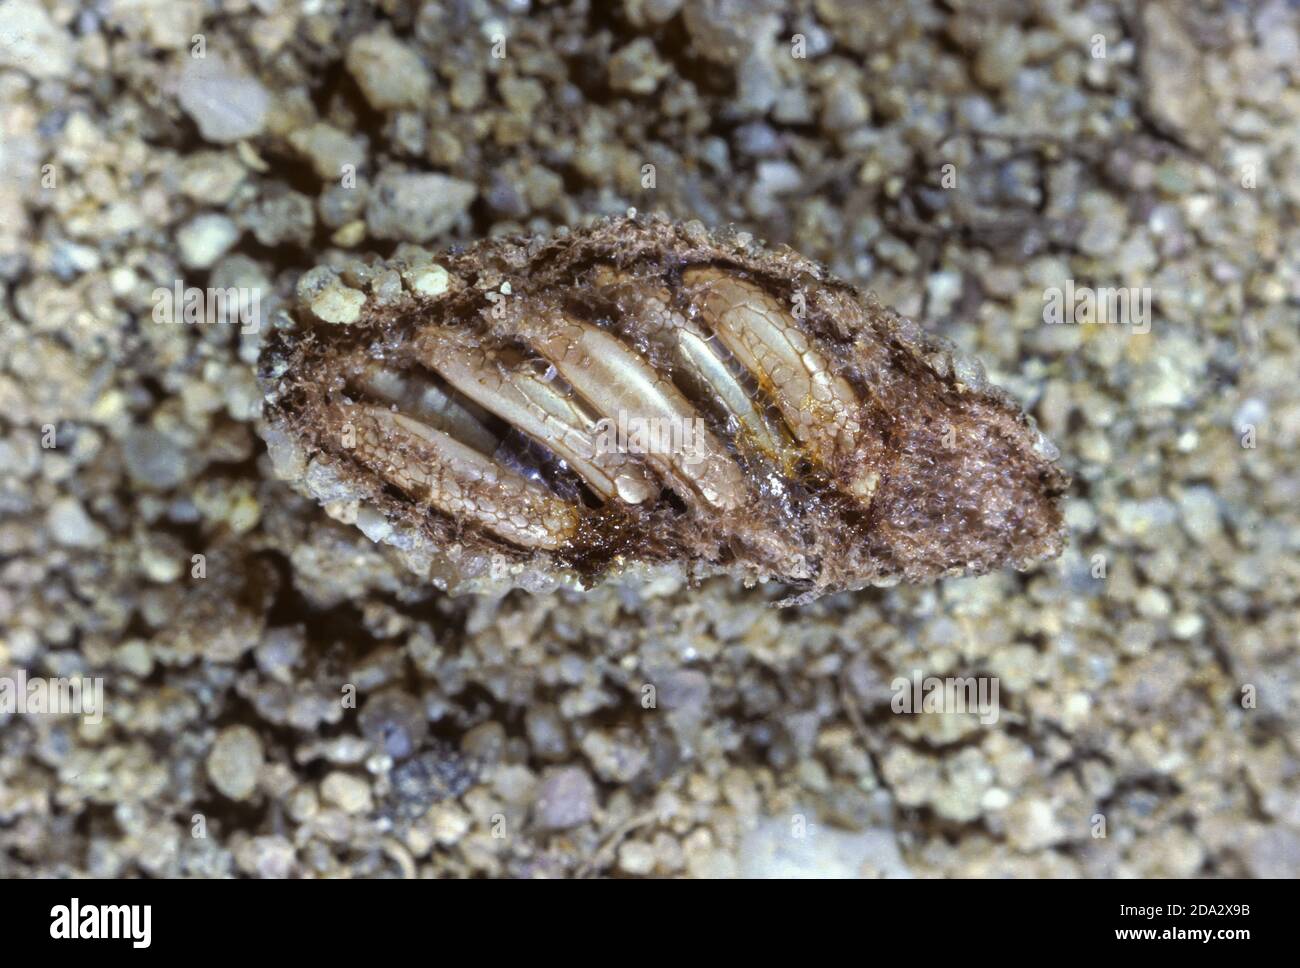 Blue-winged grasshopper (Oedipoda coerulescens, Oedipoda caerulescens), eggs in ootheca, Germany Stock Photo